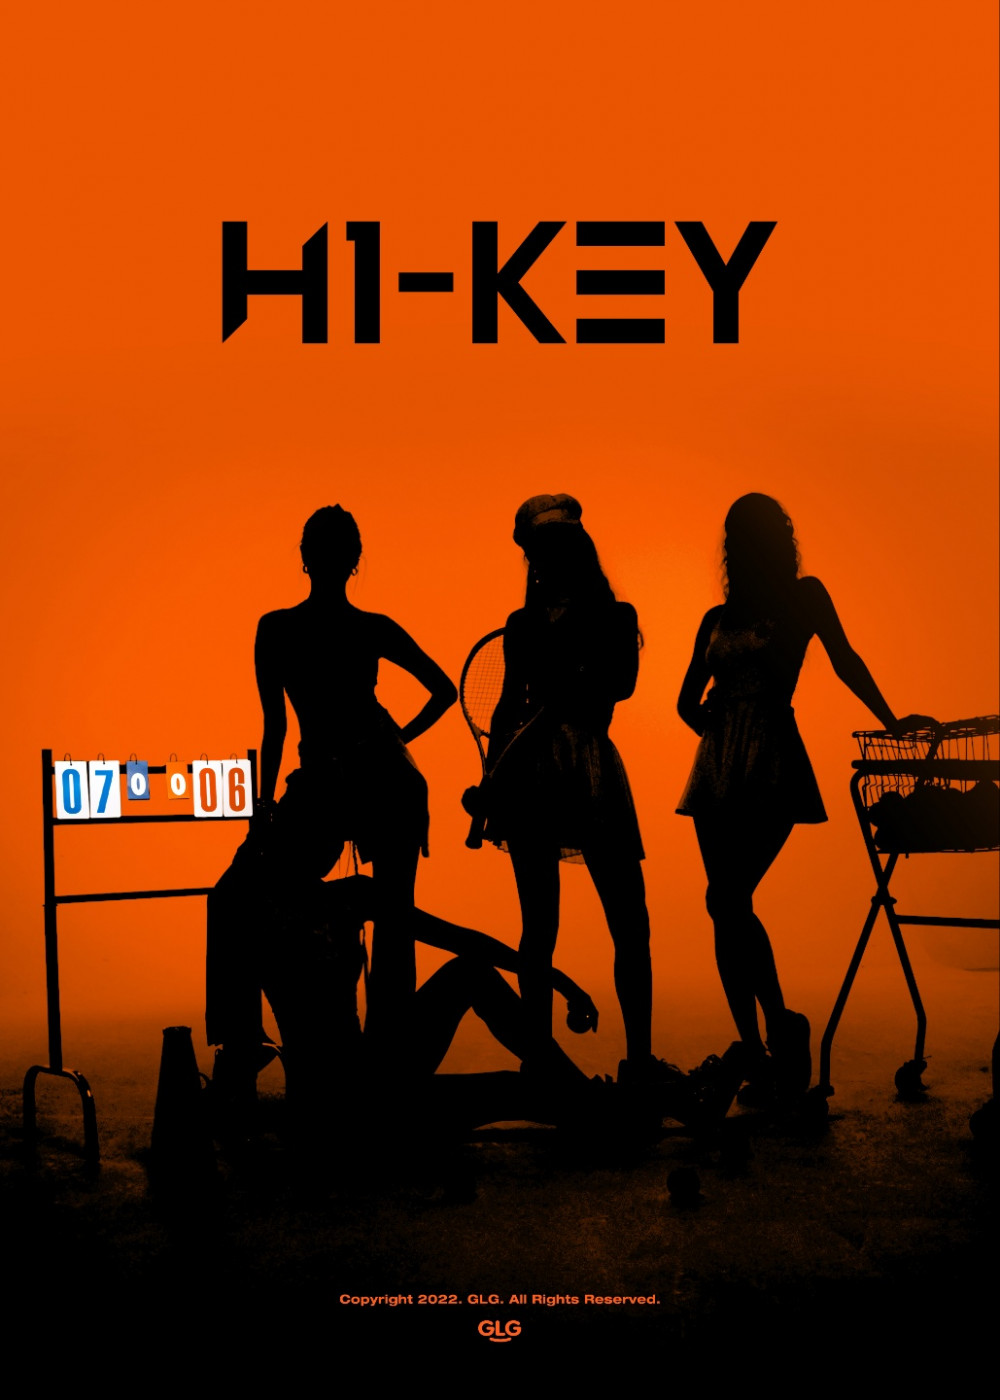 [Камбэк] H1-KEY макси-сингл "RUN": музыкальный клип